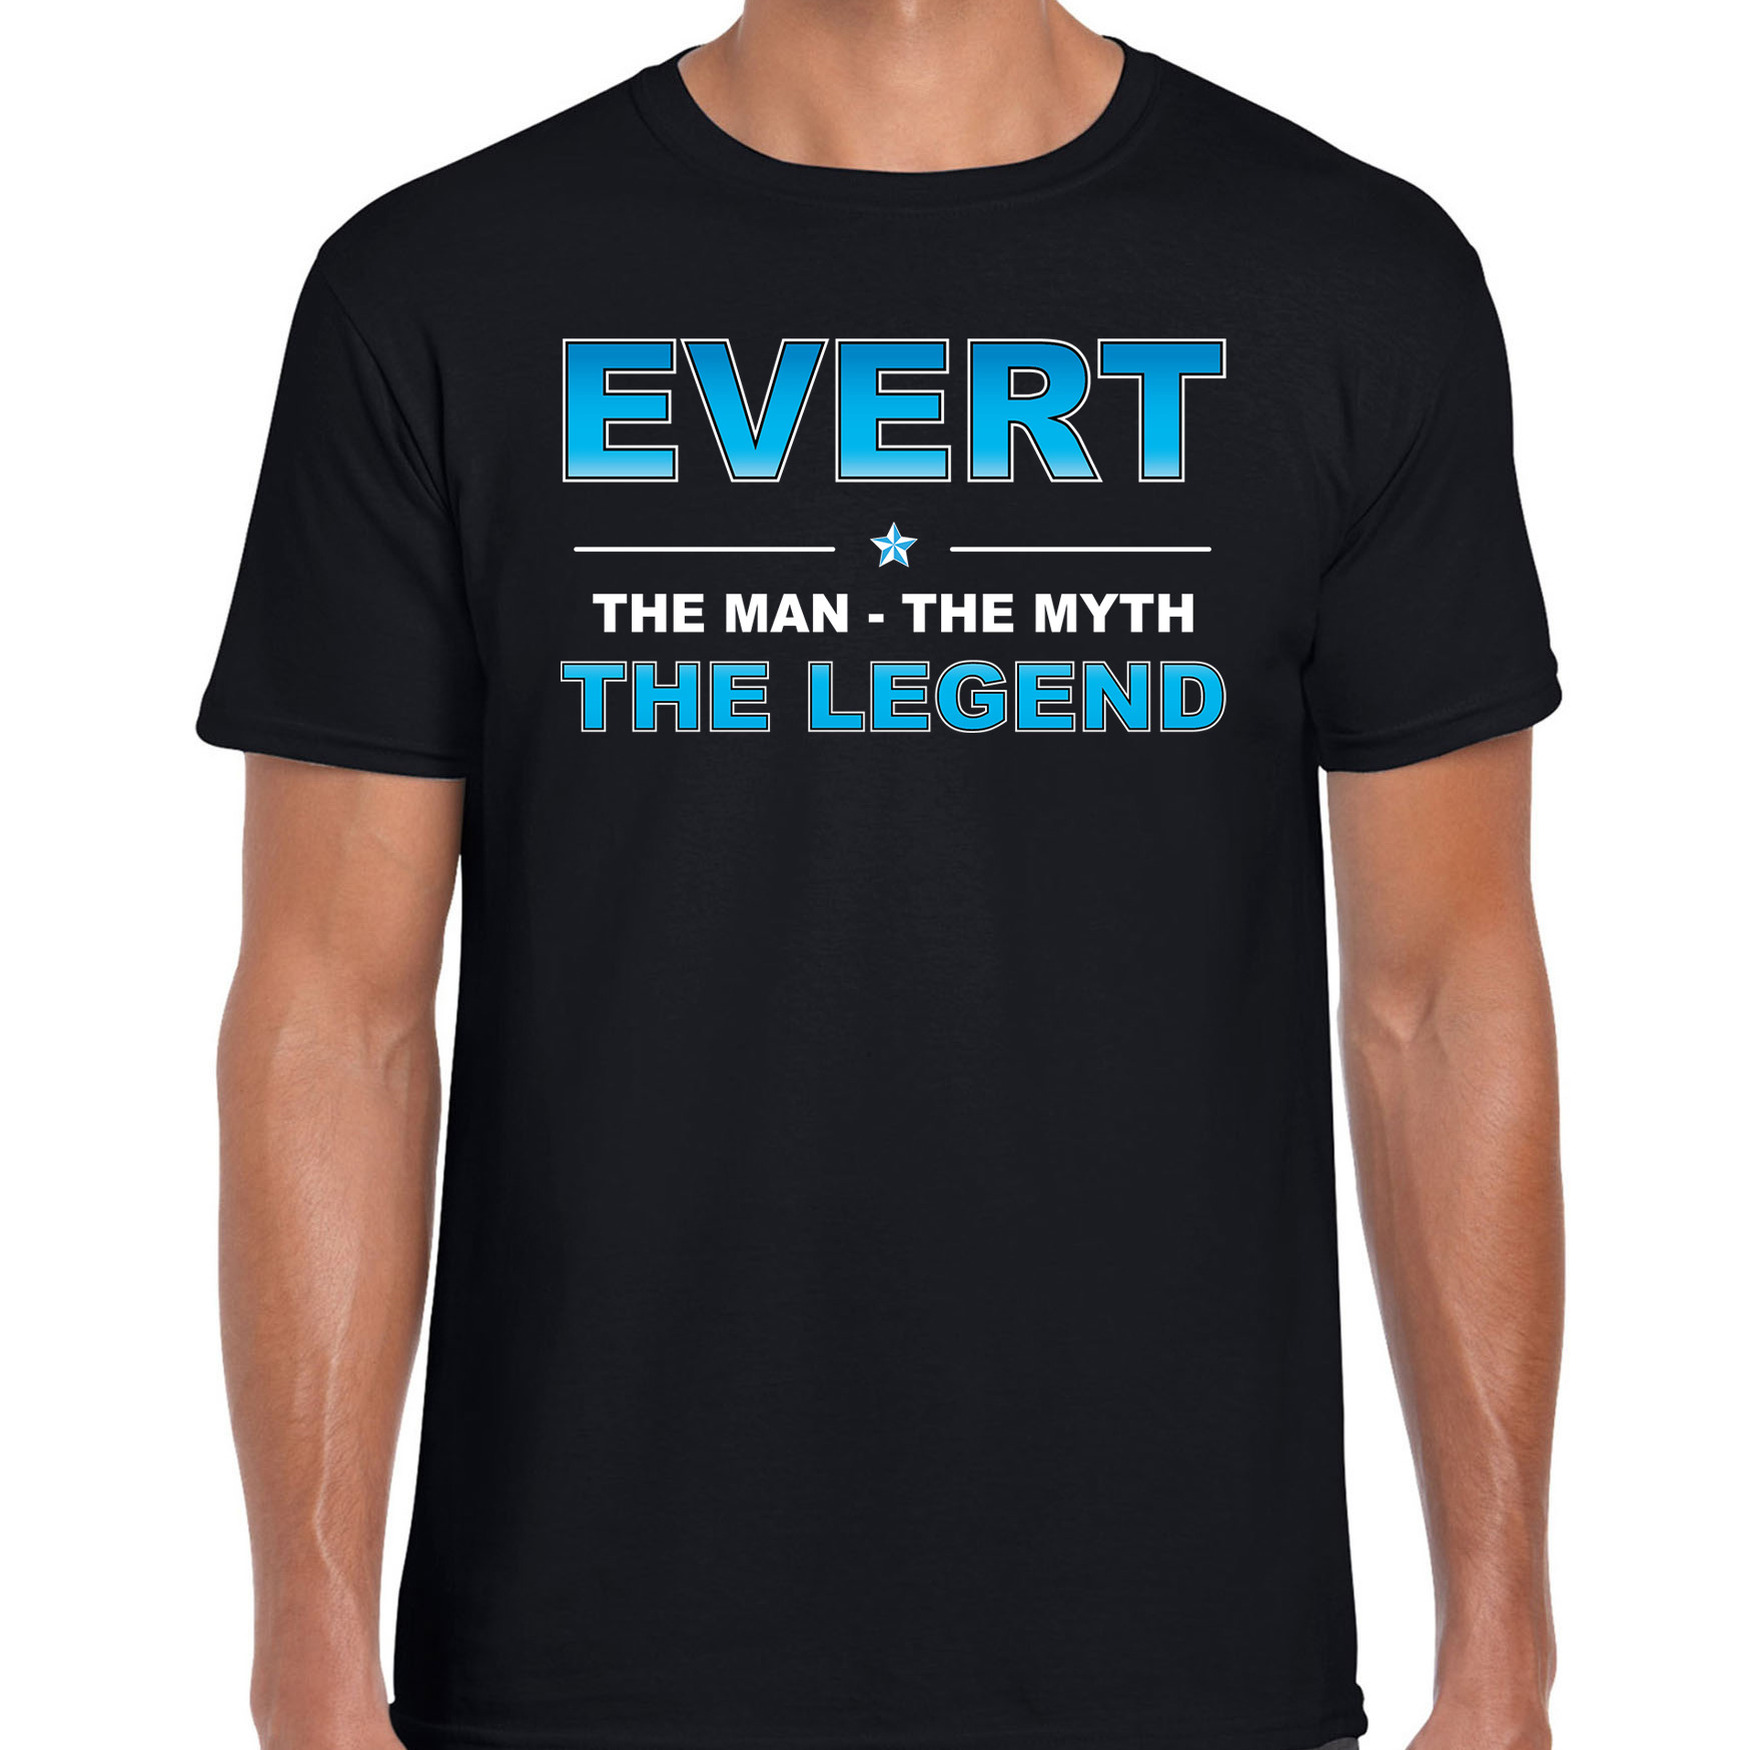 Naam cadeau t-shirt Evert - the legend zwart voor heren